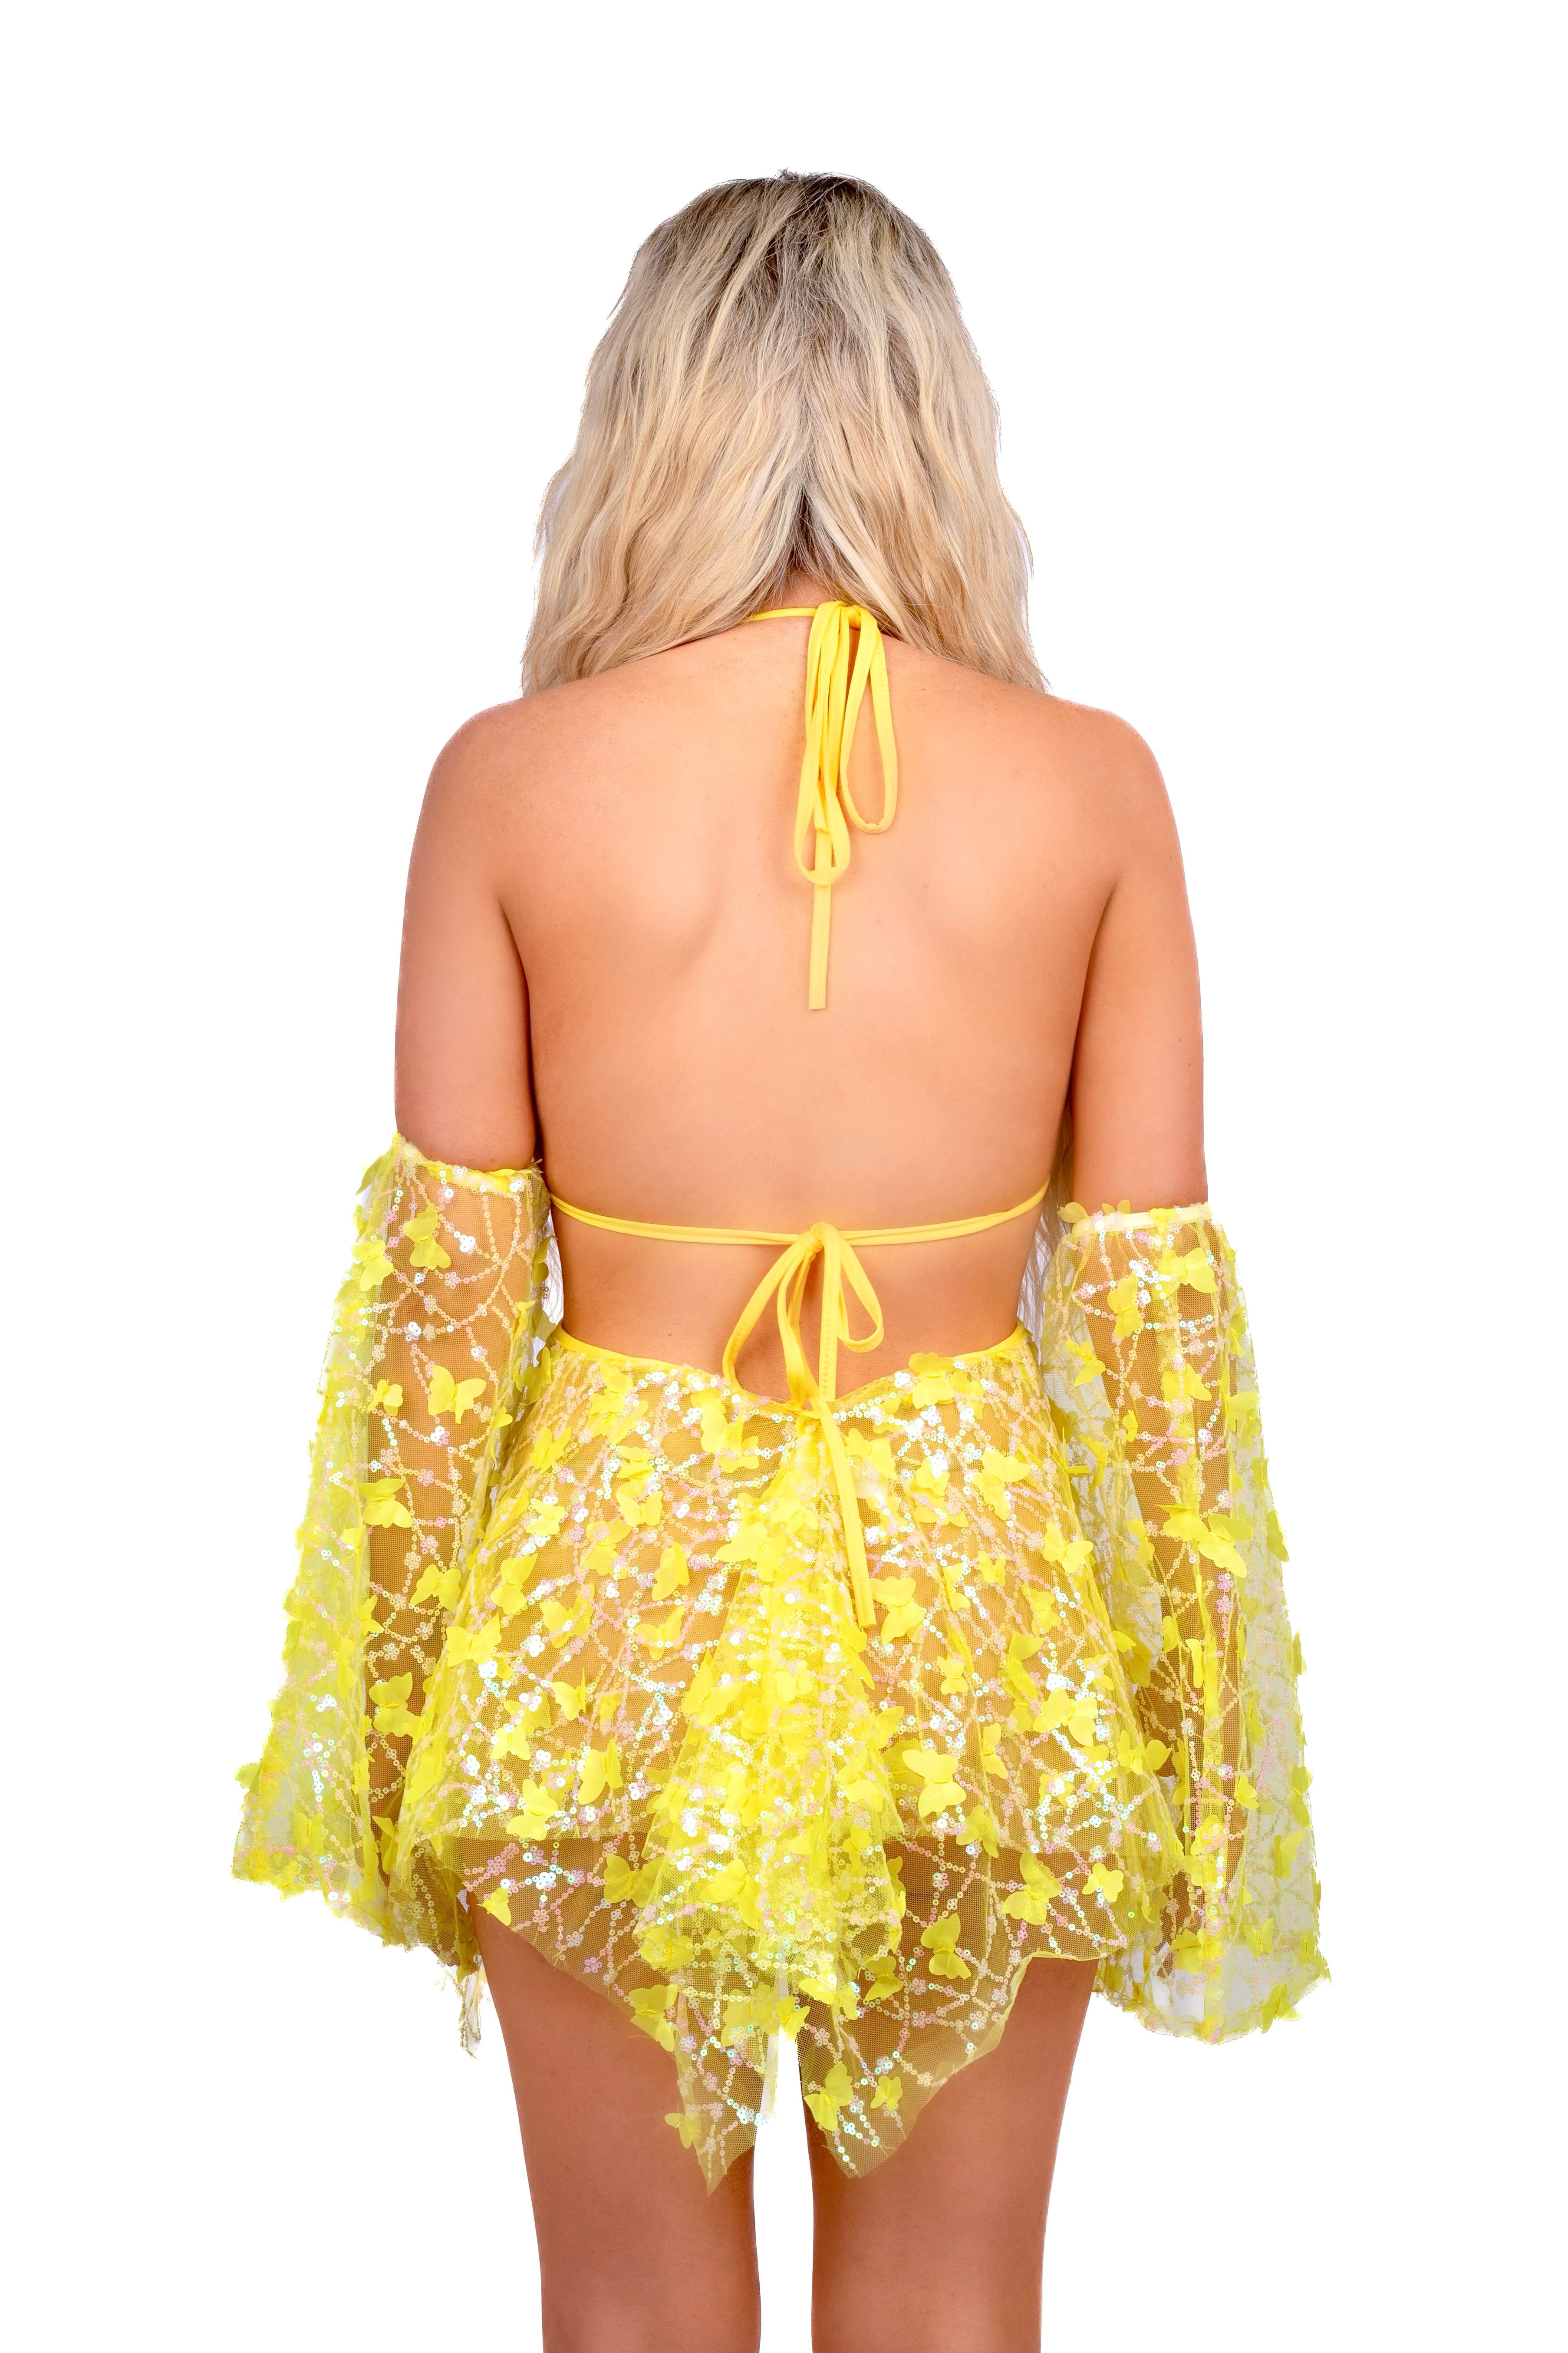 Sunflower Fairy Blossom Dress (2 pc)